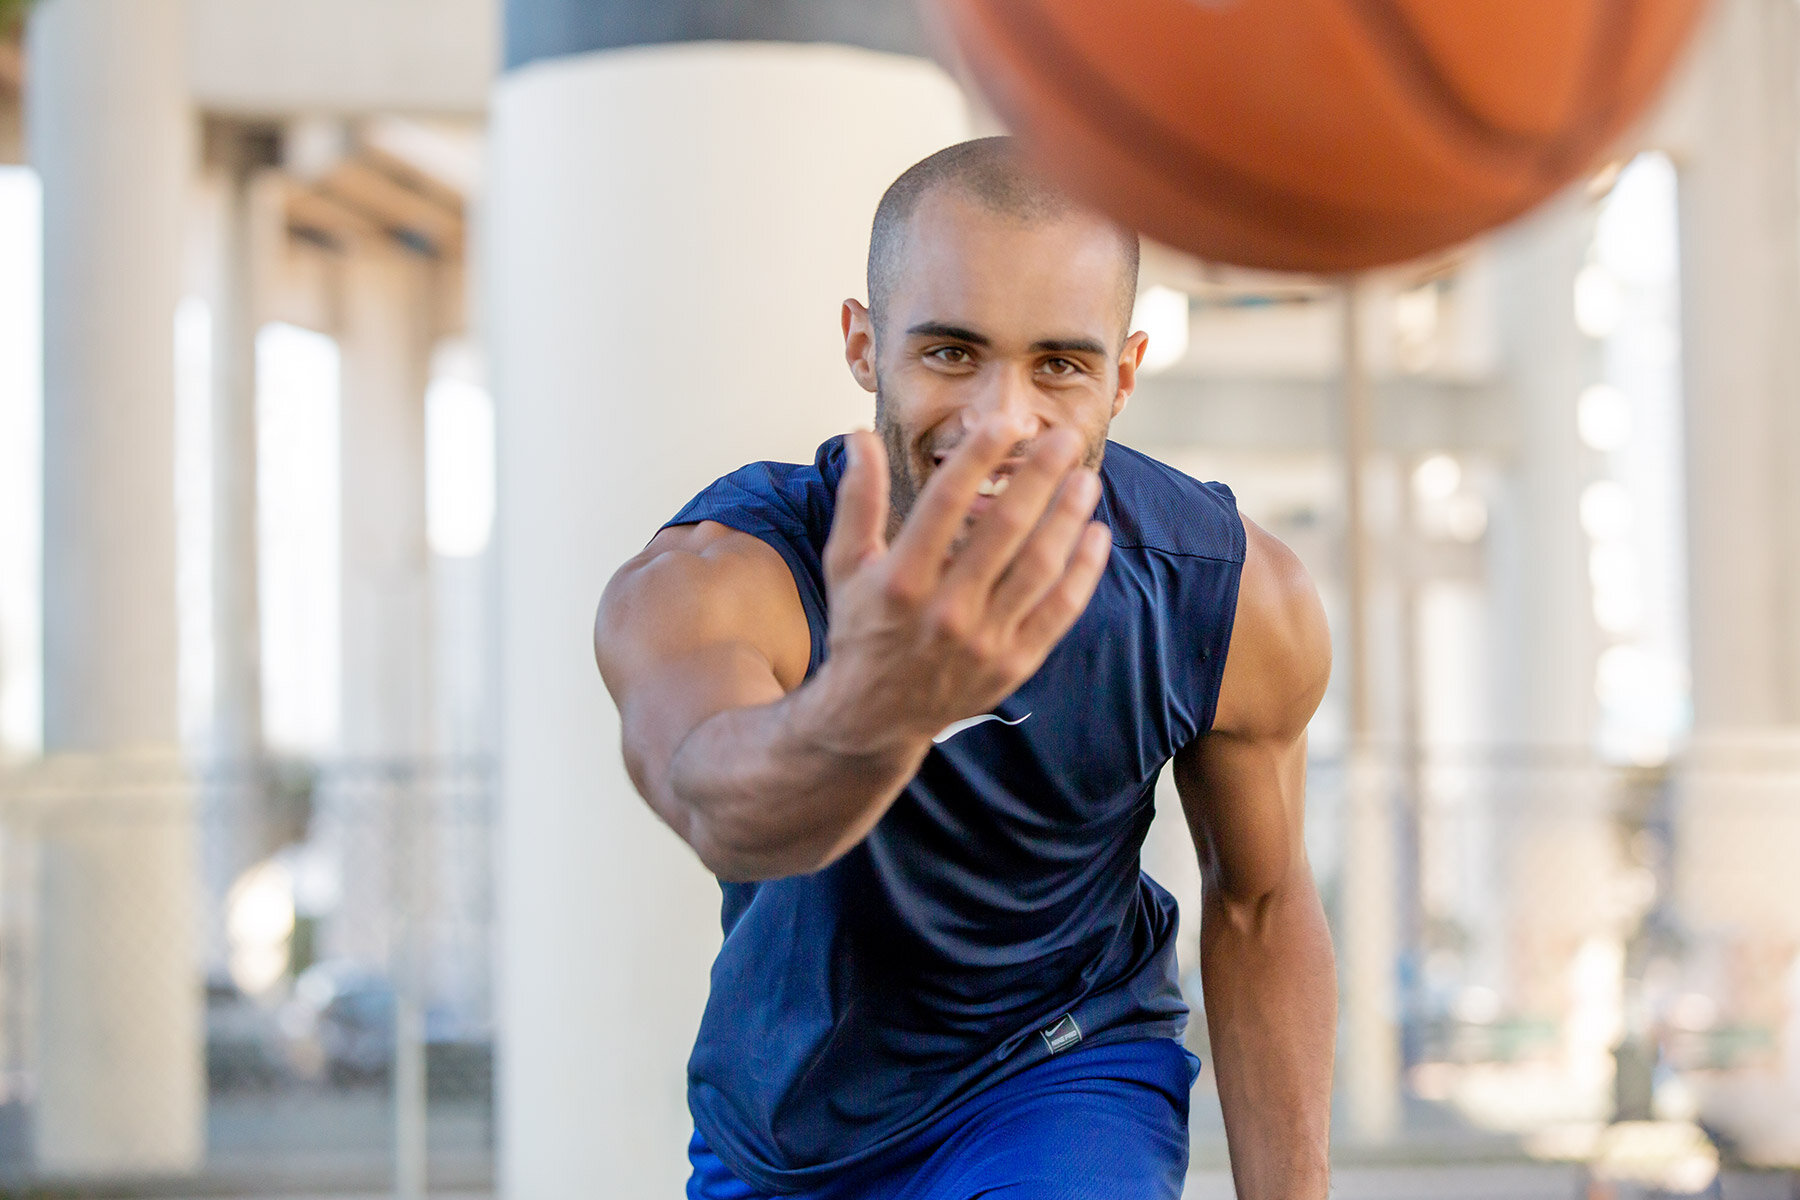 Fitness_workout_man_playing_basketball_miami_portrait_david_gonzalez_photographer.jpg